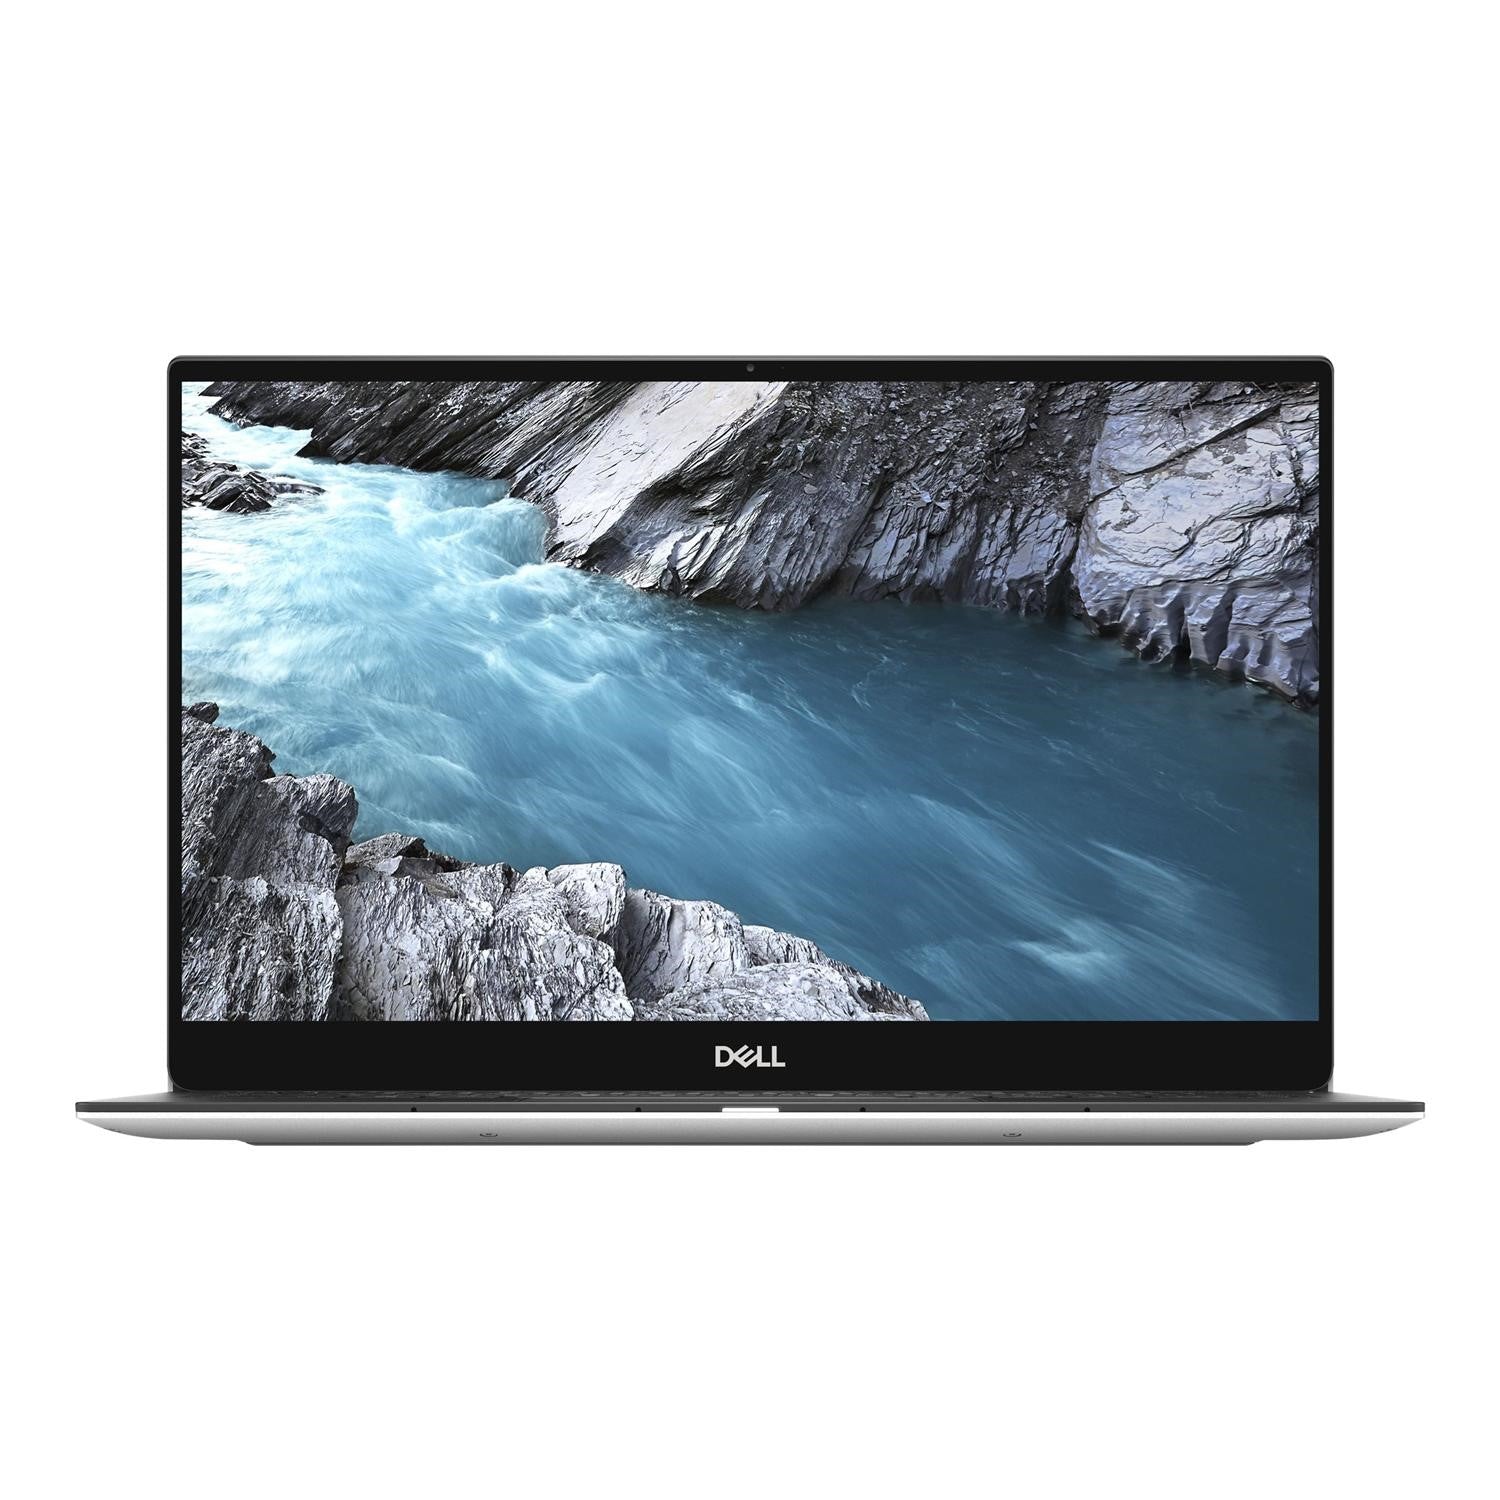 Dell XPS 13 9380 Laptop, Intel Core i7, 8GB RAM, 256GB SSD, 13.3”, Silver - Refurbished Pristine